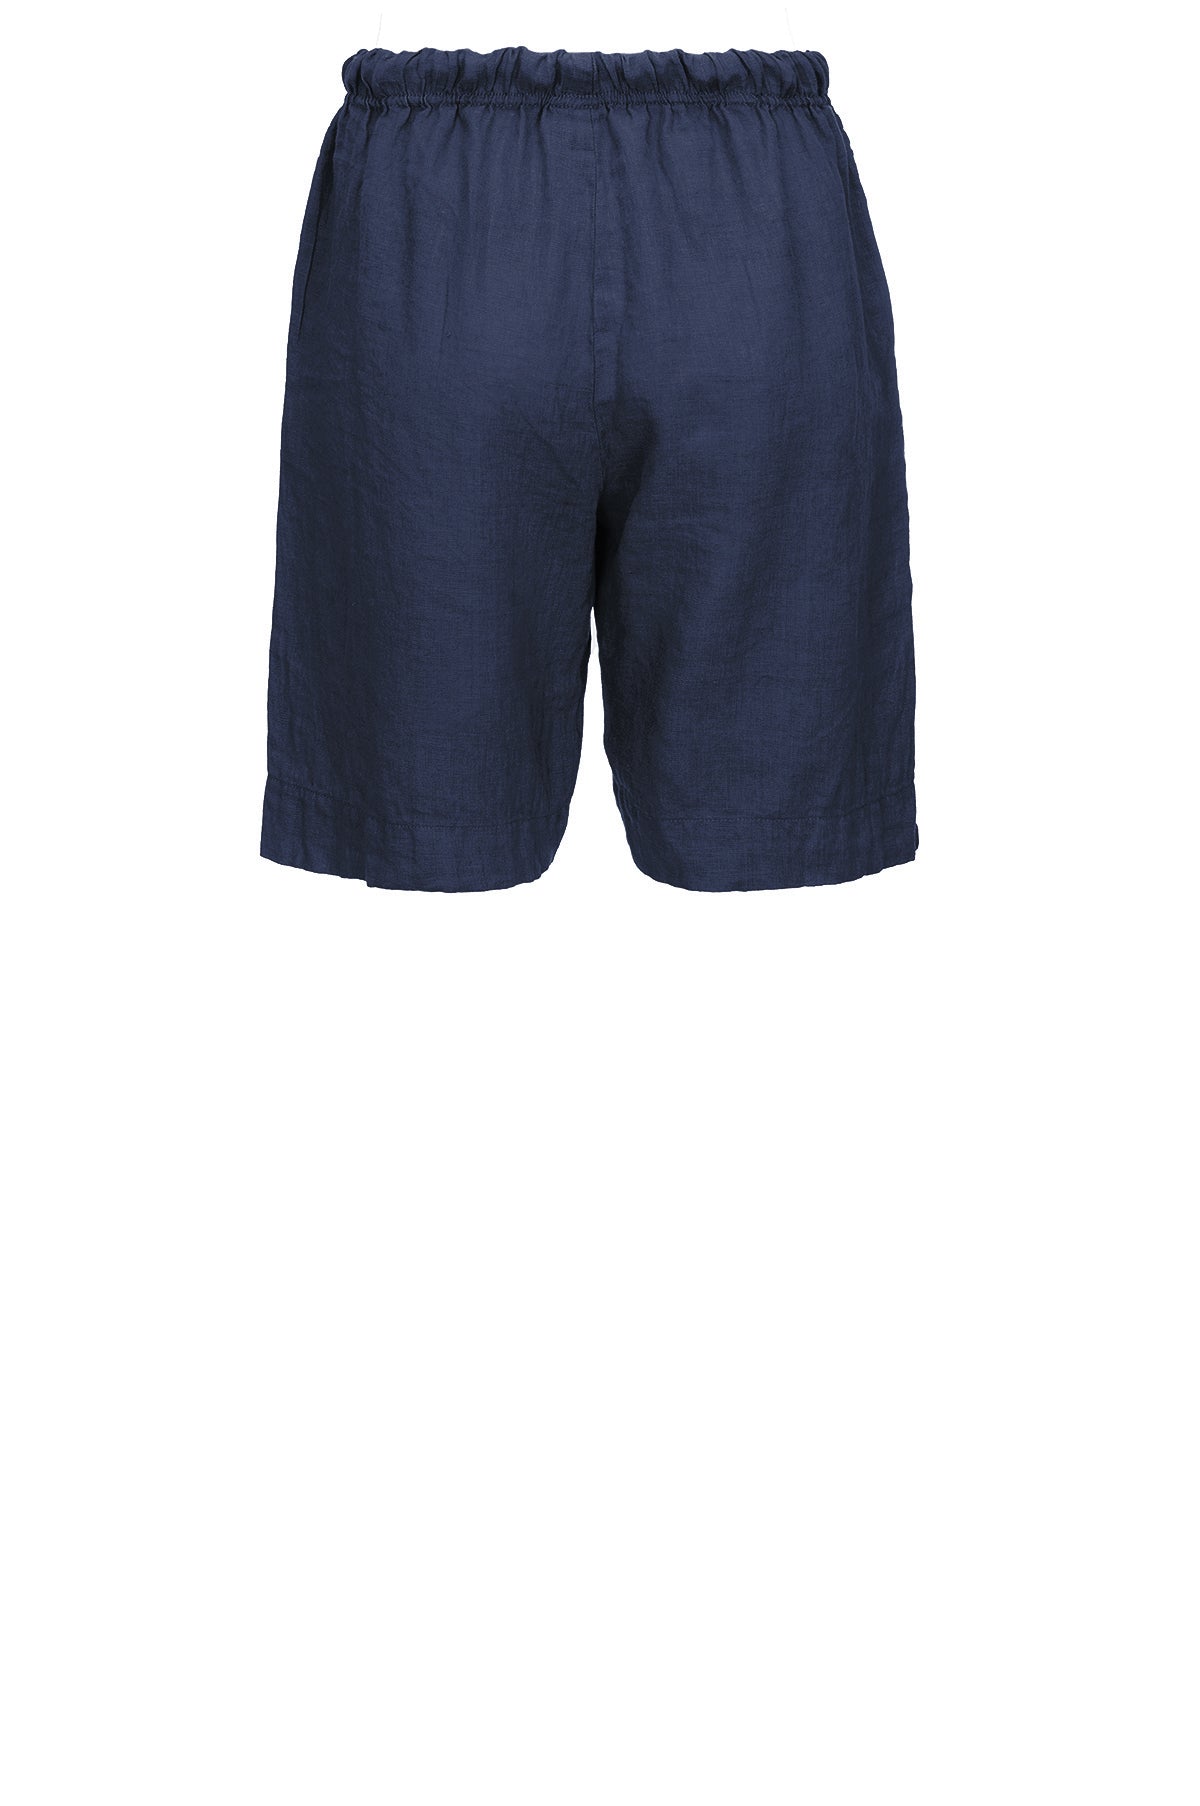 LUXZUZ // ONE TWO Lailai Shorts Shorts 575 Navy